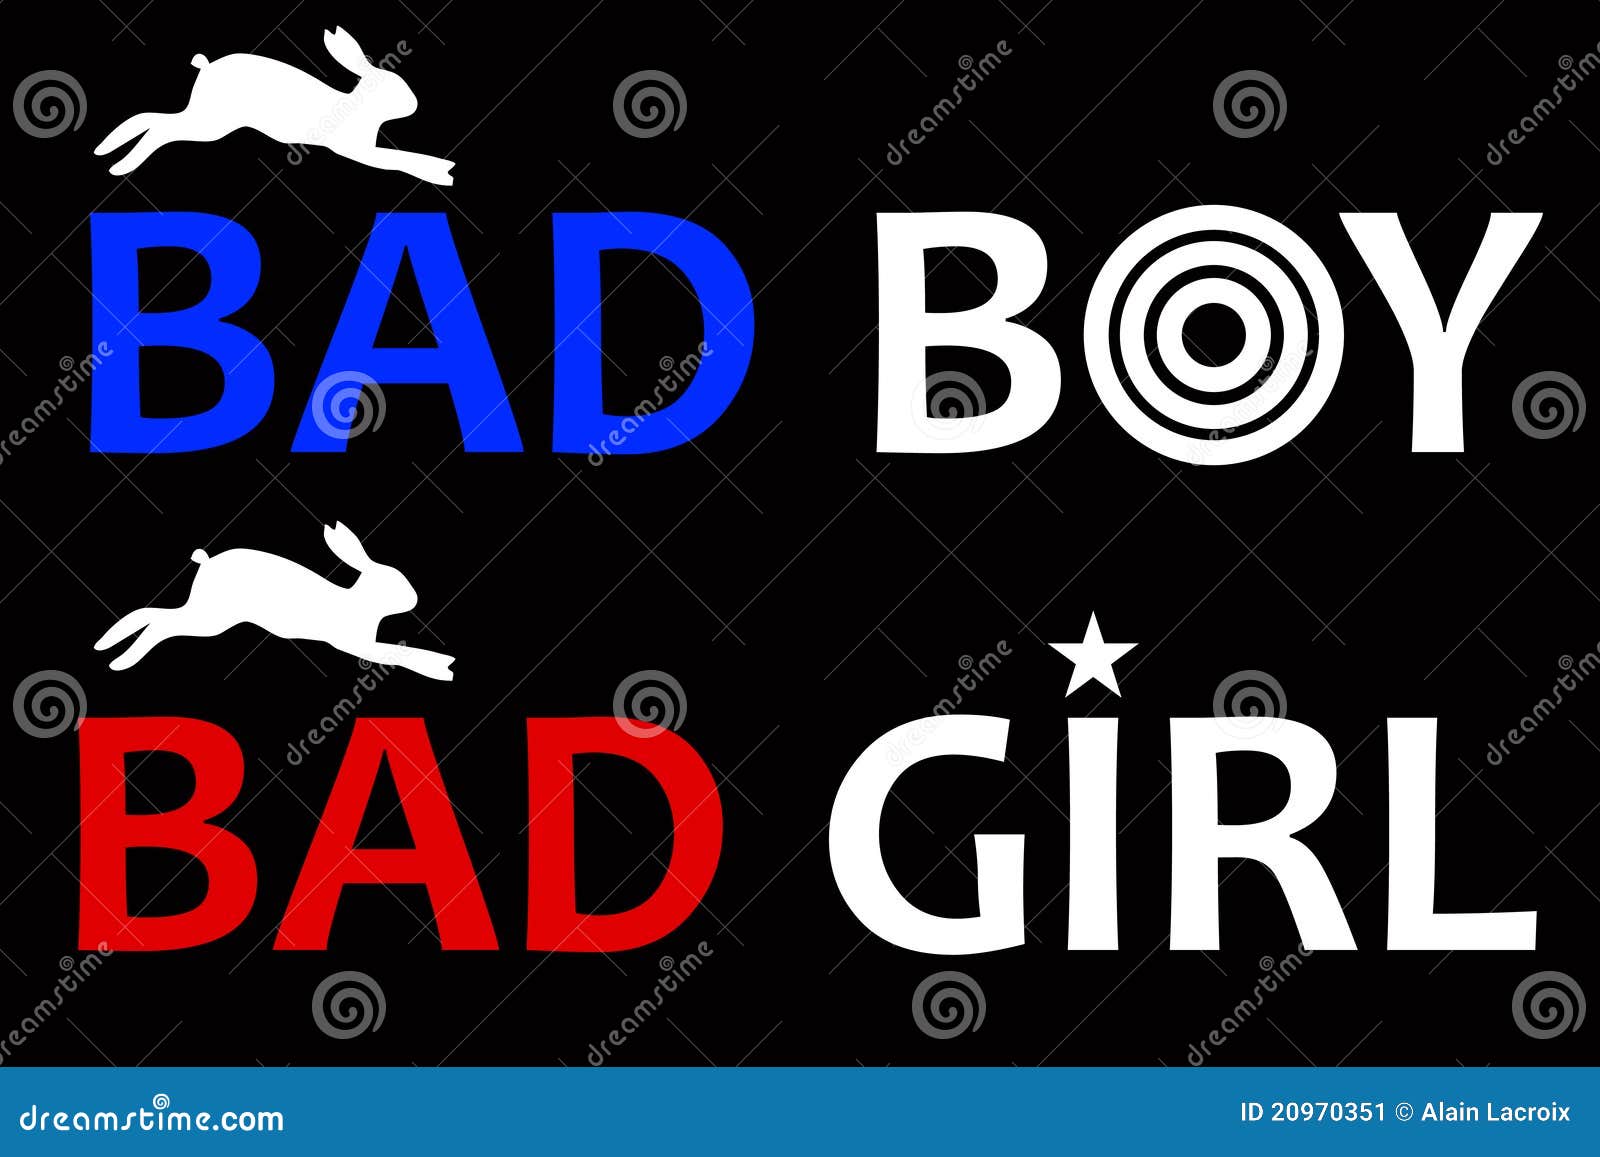 Bad Girl Esport Logo Mascot Design: Vector có sẵn (miễn phí bản quyền)  1741558928 | Shutterstock